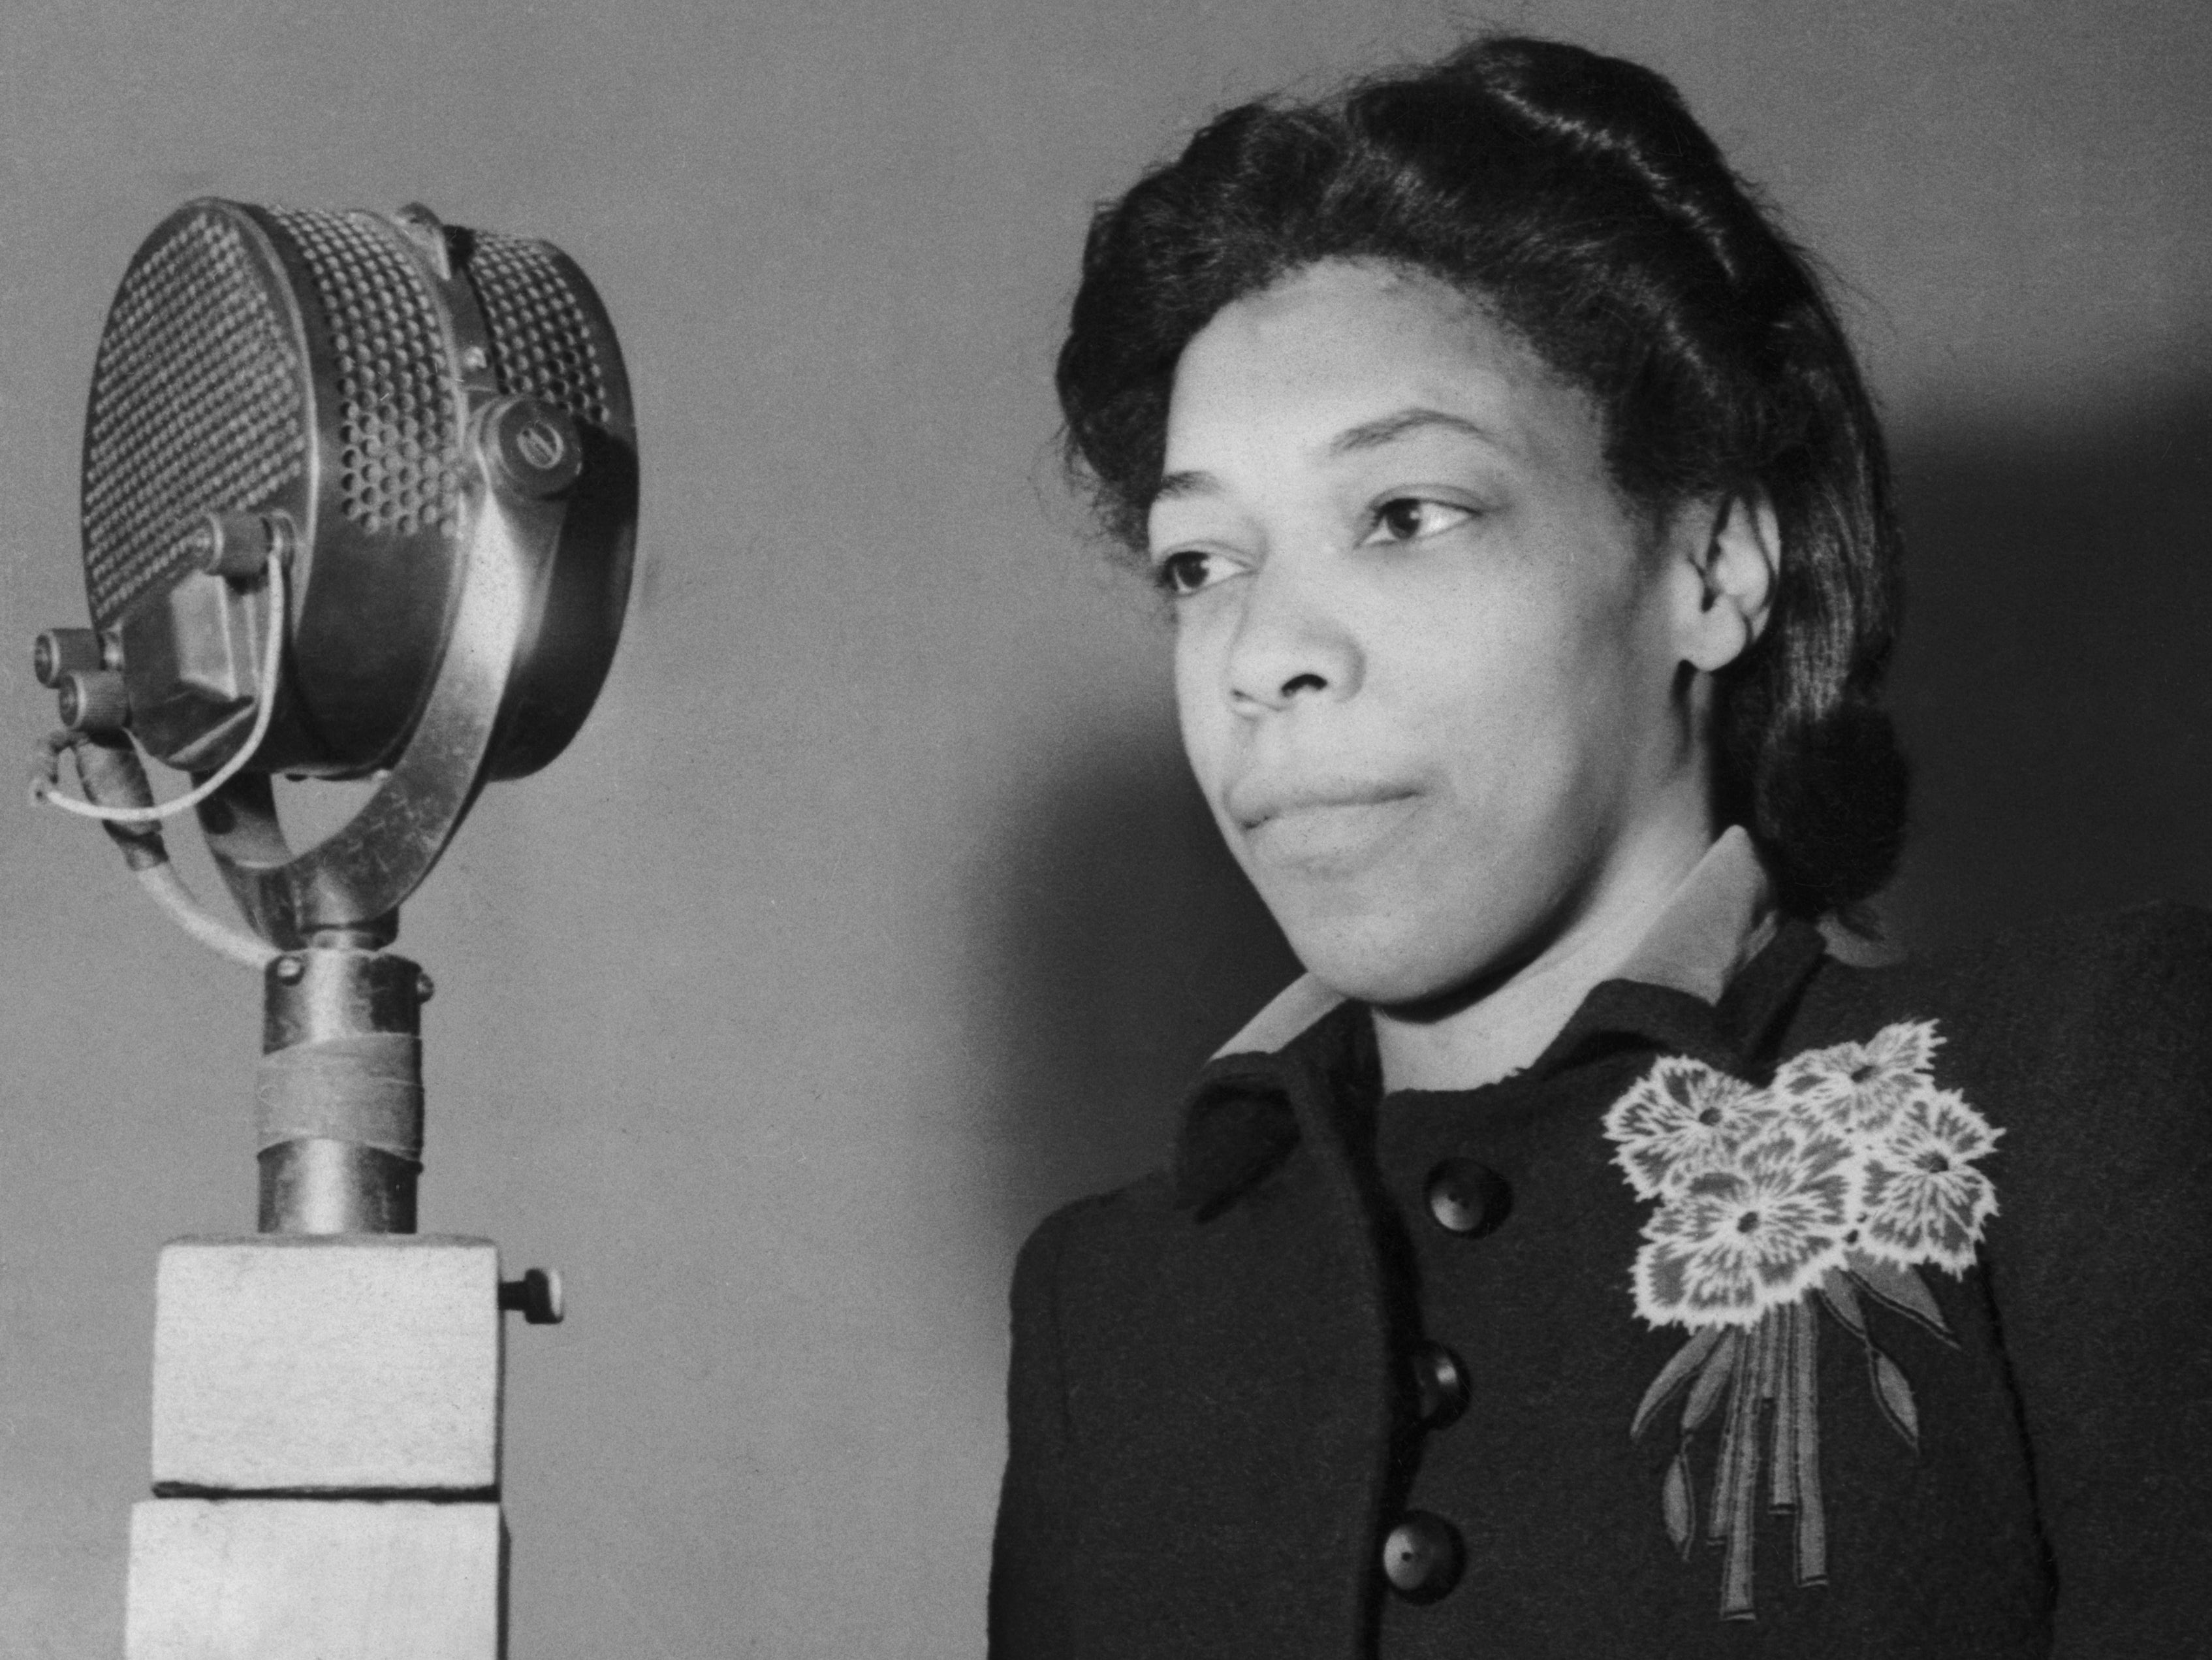 Una Marson was a black Jamaican activist, writer and broadcaster